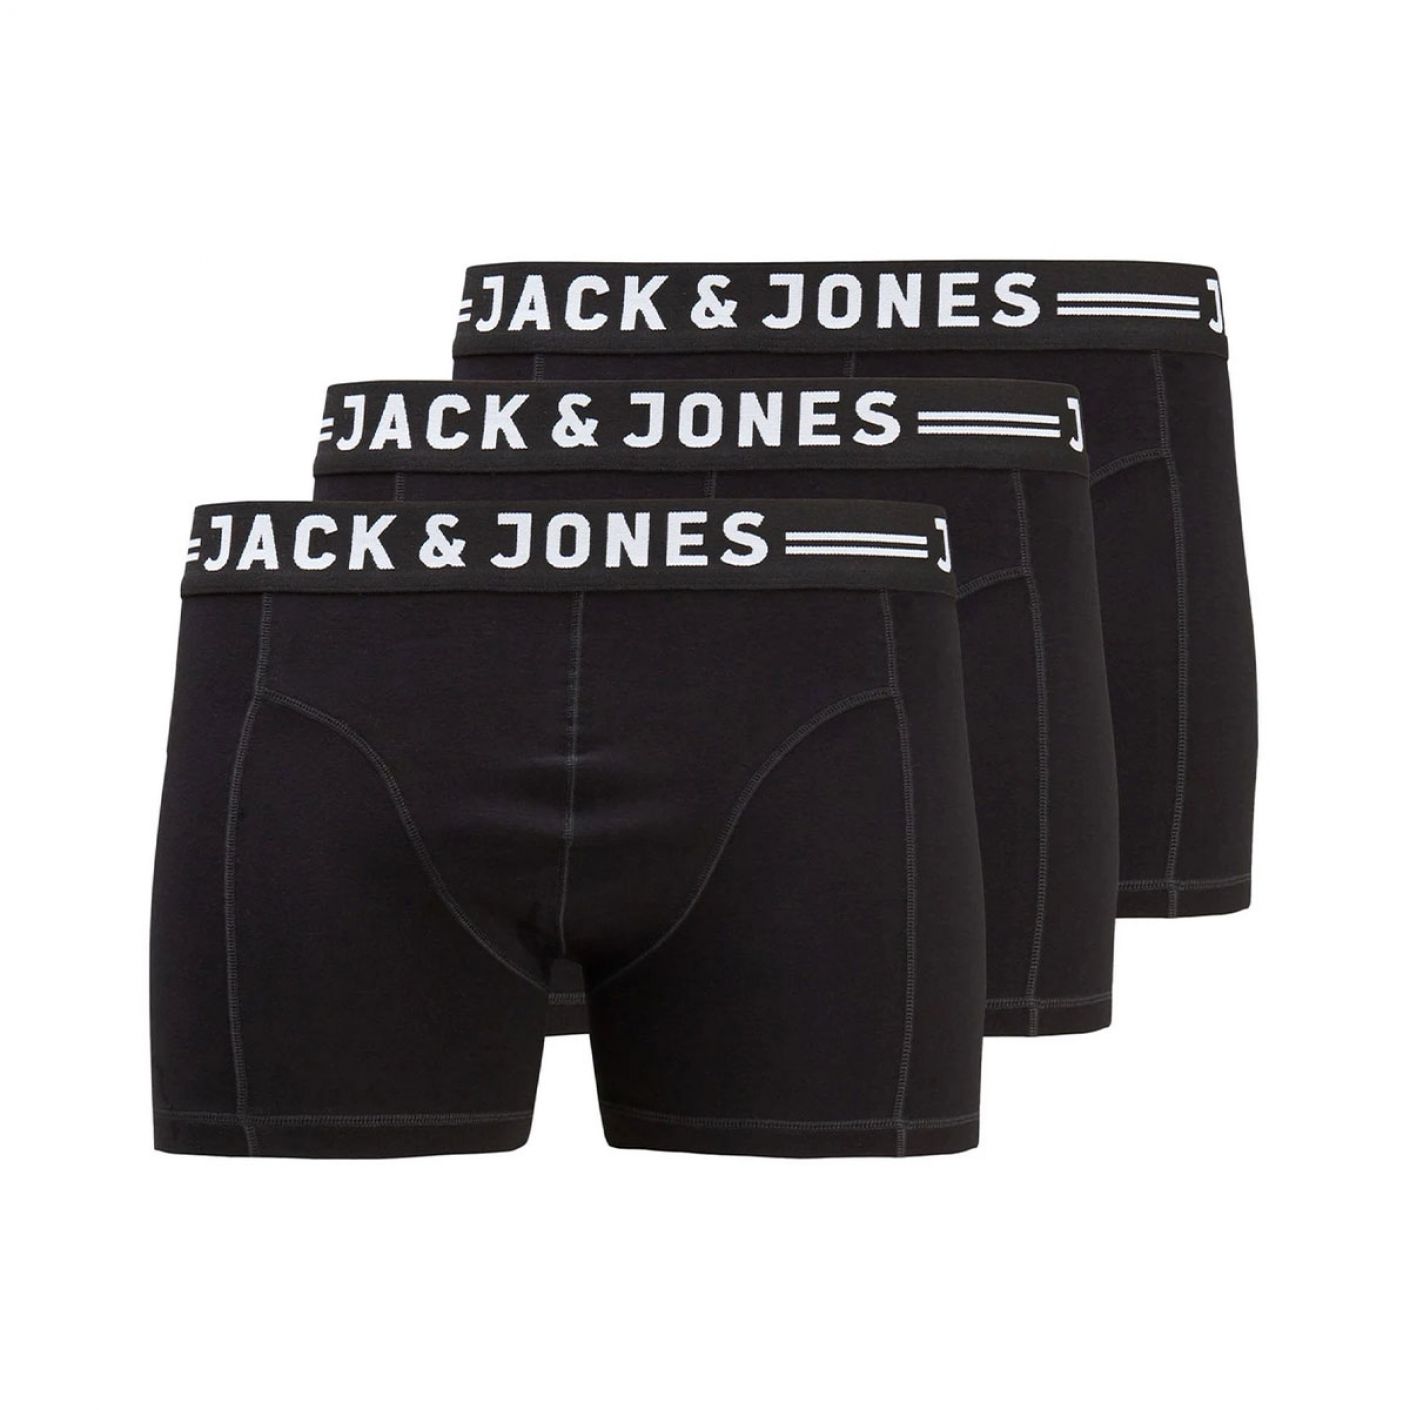 Jack & Jones Boxer Plus Size 3pkk Neri da Uomo